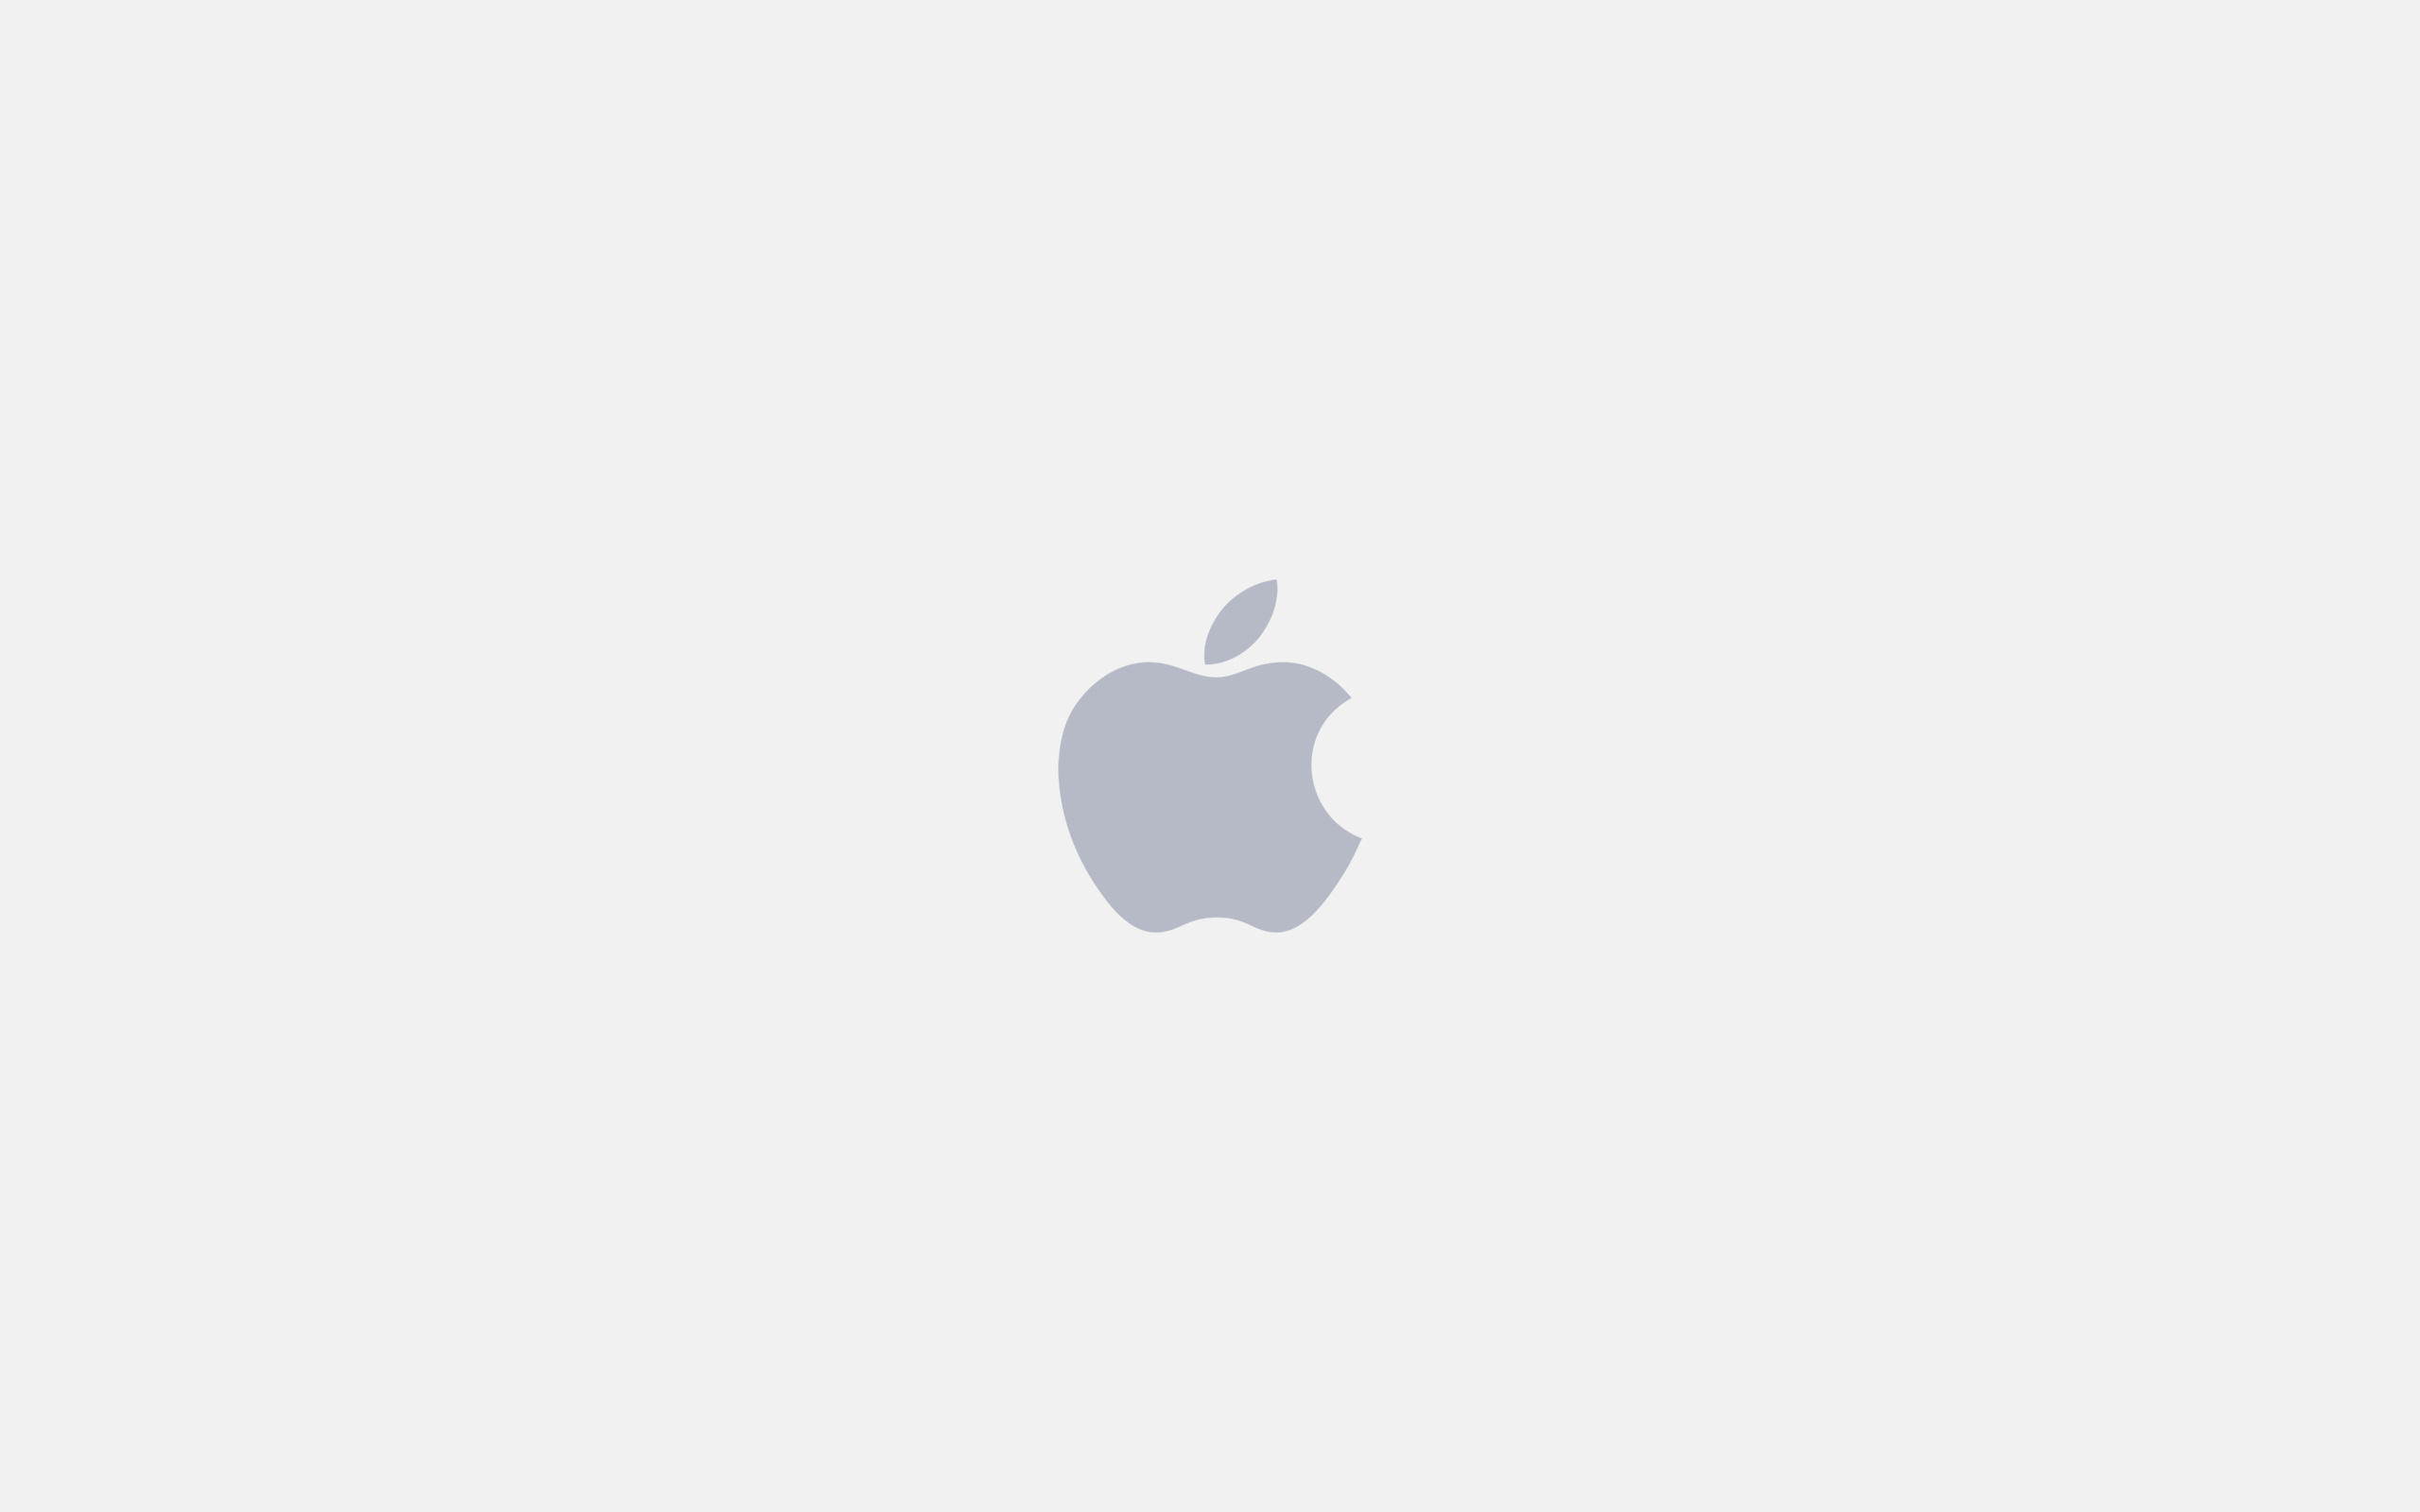 iMac Logo, White Apple logo wallpapers, Clean and minimalist, Timeless design, 2560x1600 HD Desktop